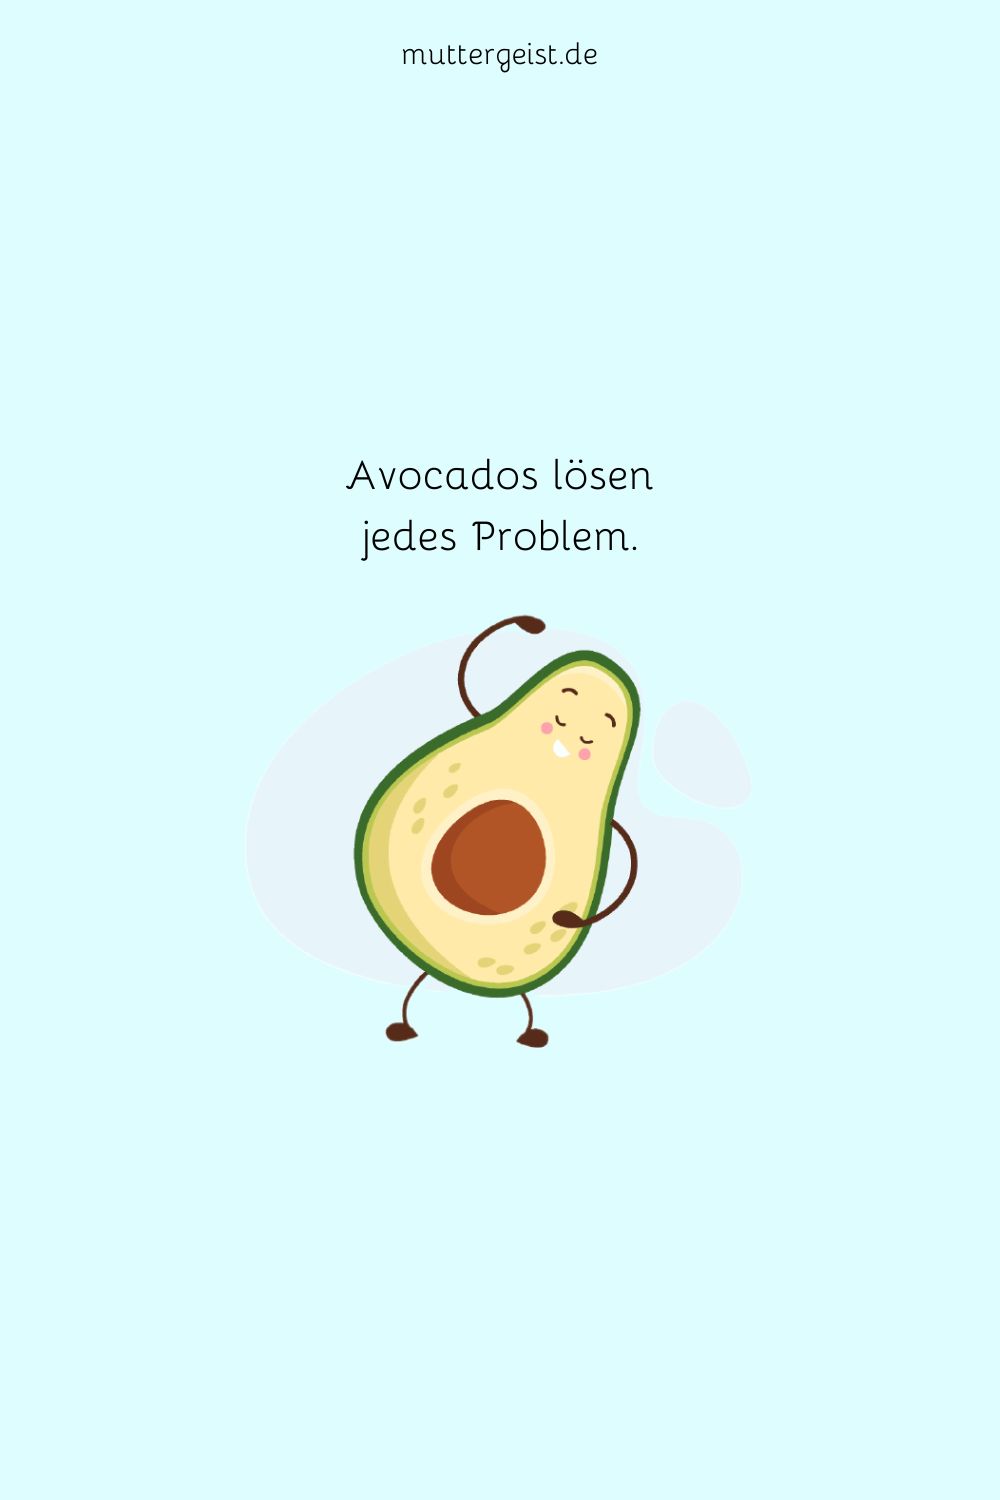 Avocados lösen jedes Problem